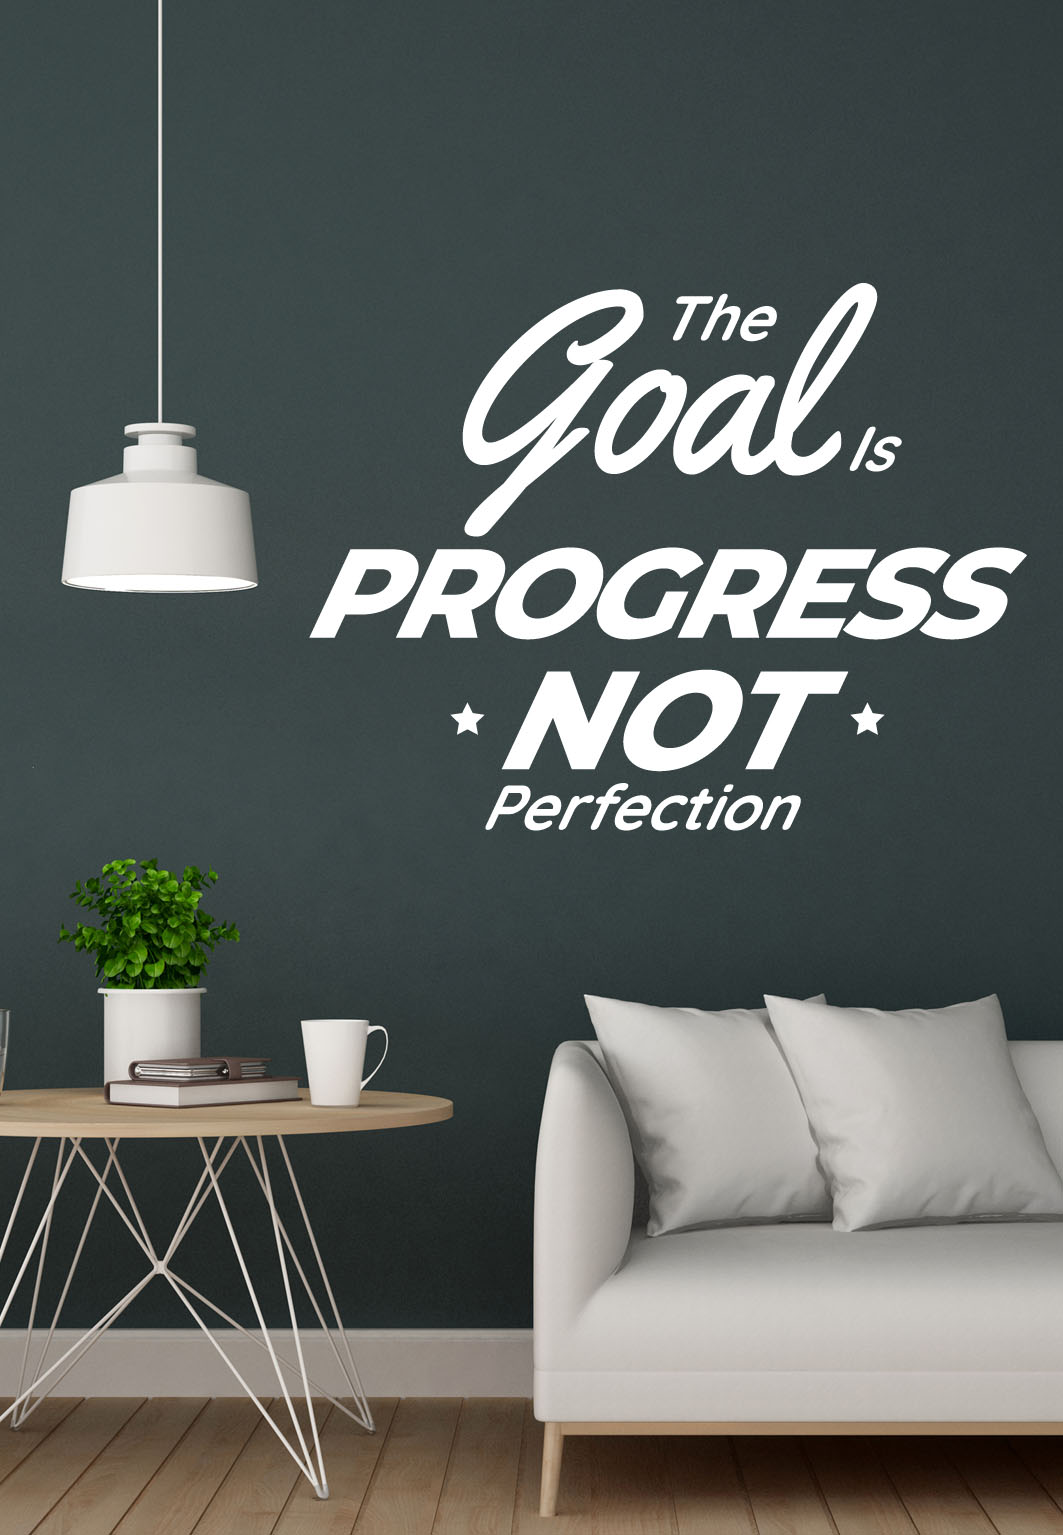 מדבקת קיר - The goal is progress not perfection